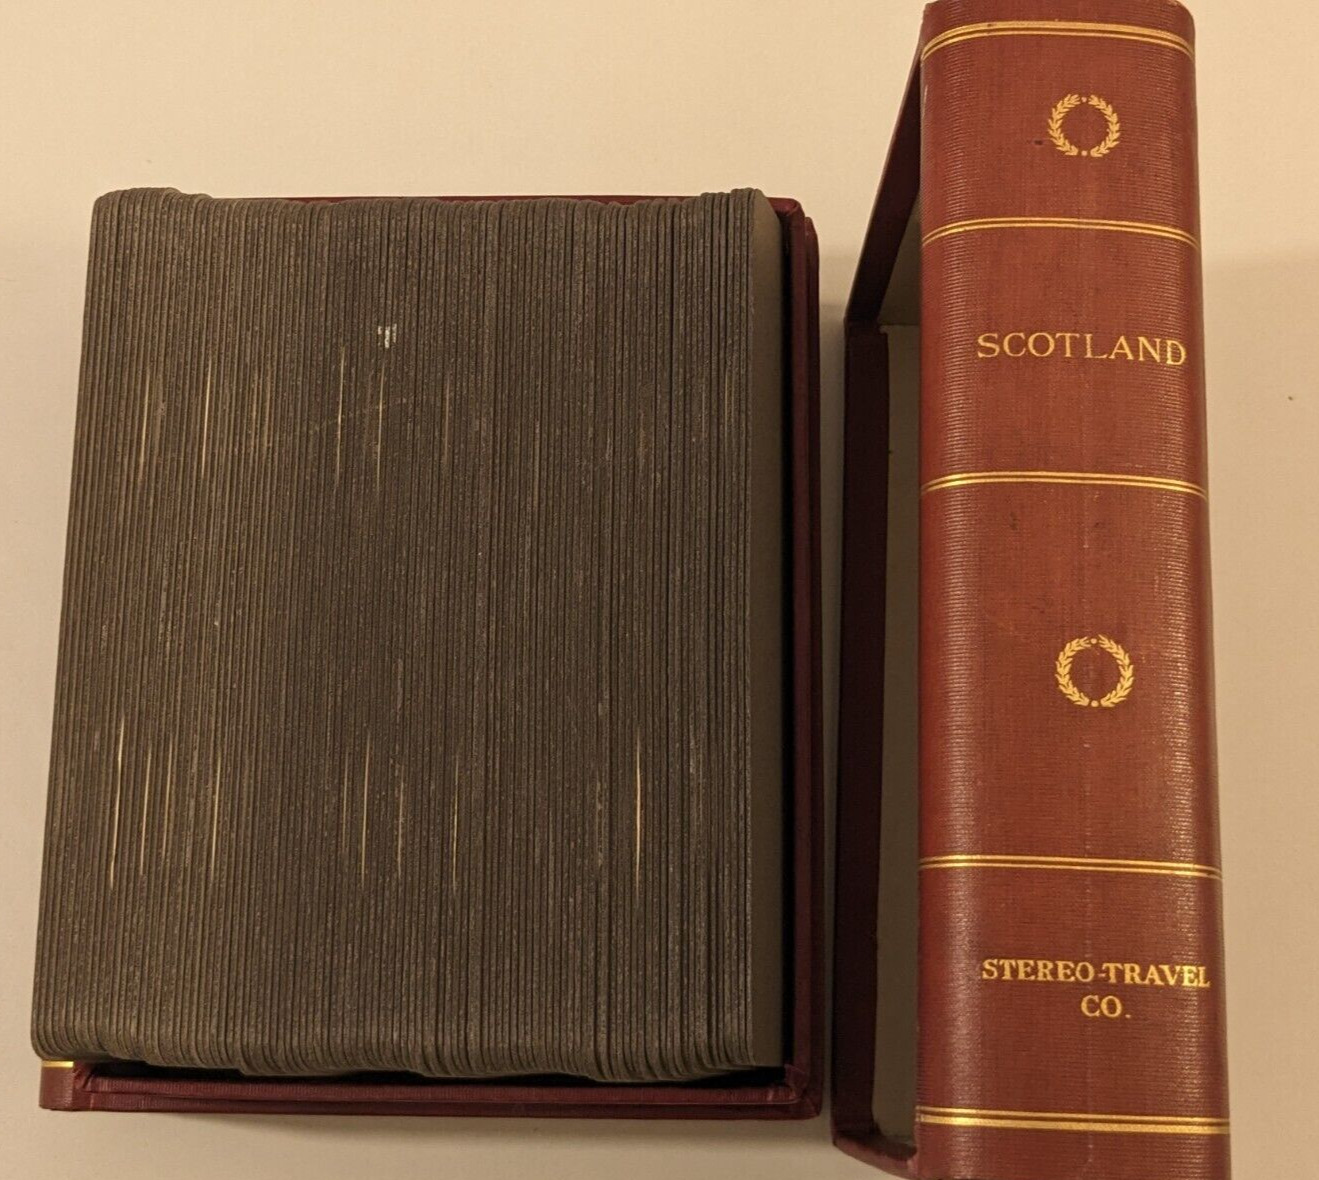 (100) Scotland Stereo Travel Stereoview Photographs Boxed Set